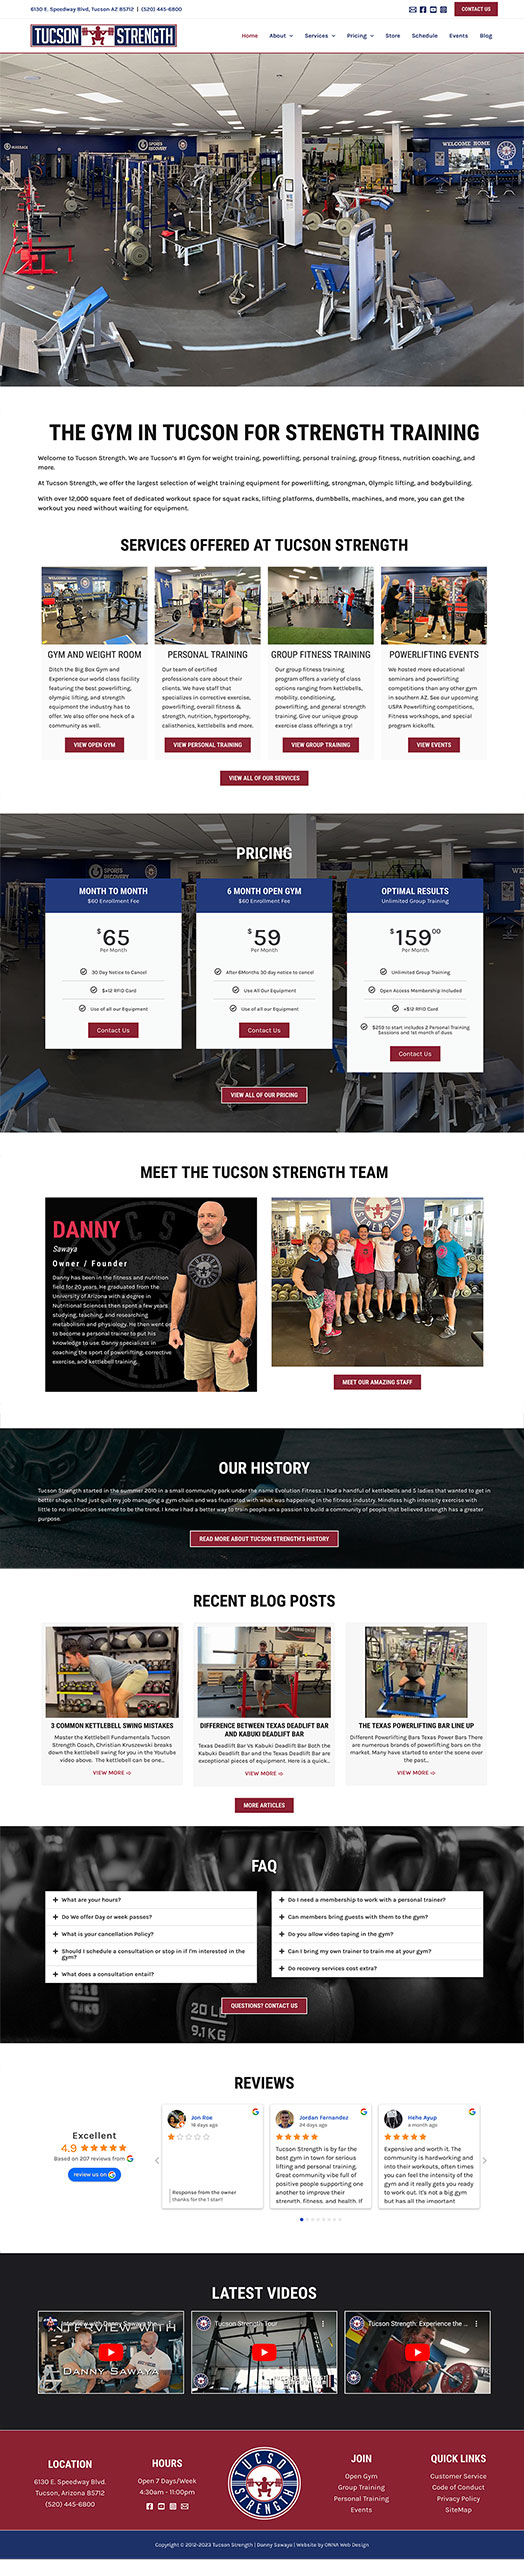 Screenshot of Tucson Strength's website design